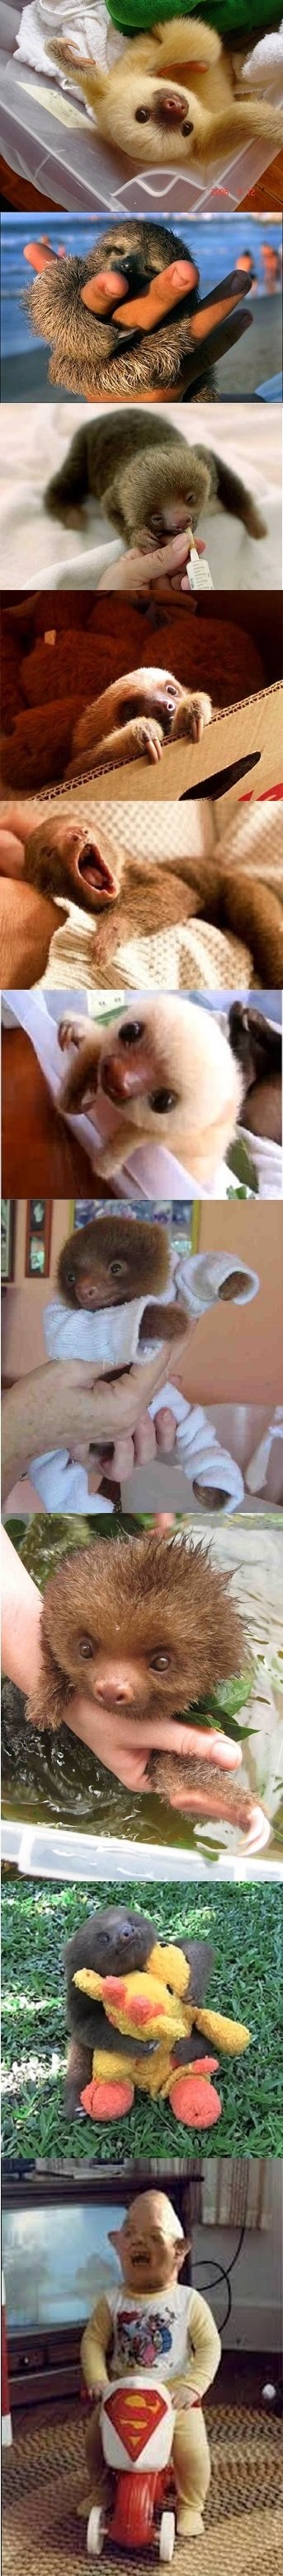 Baby Sloths...